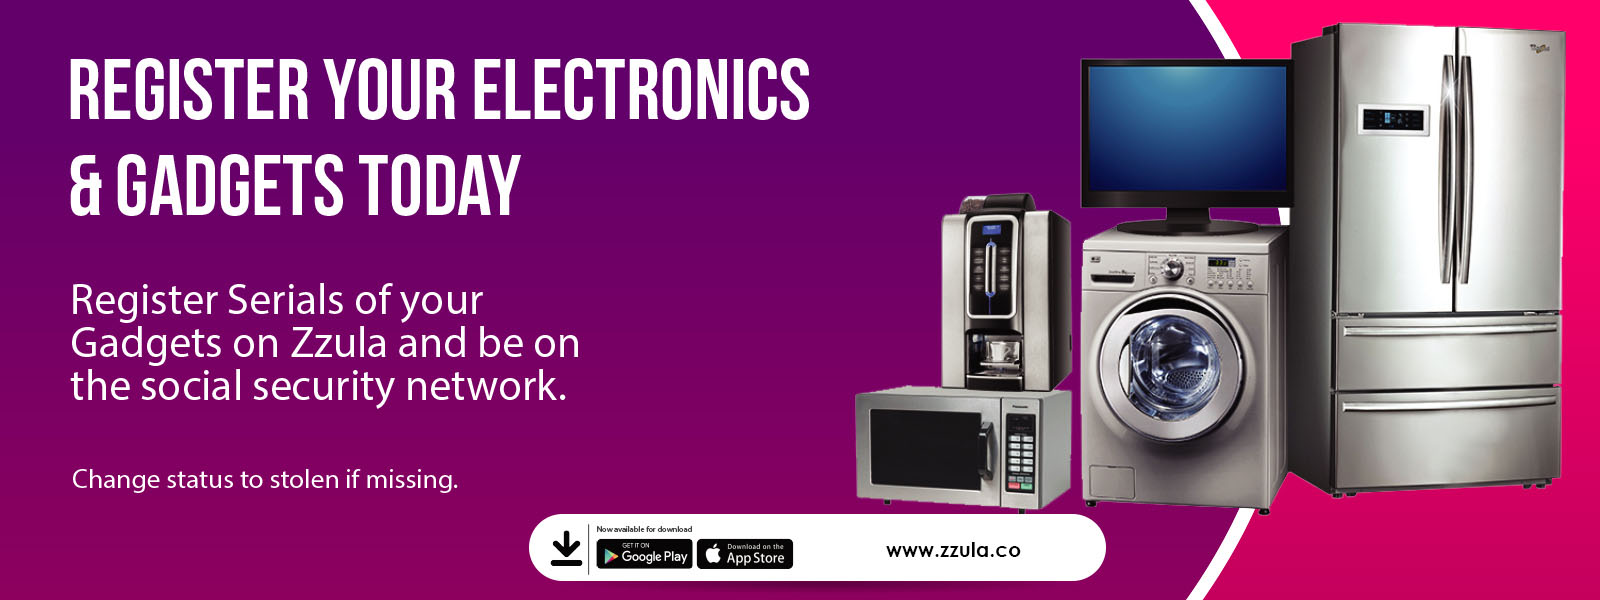 Register Electronics on Zzula